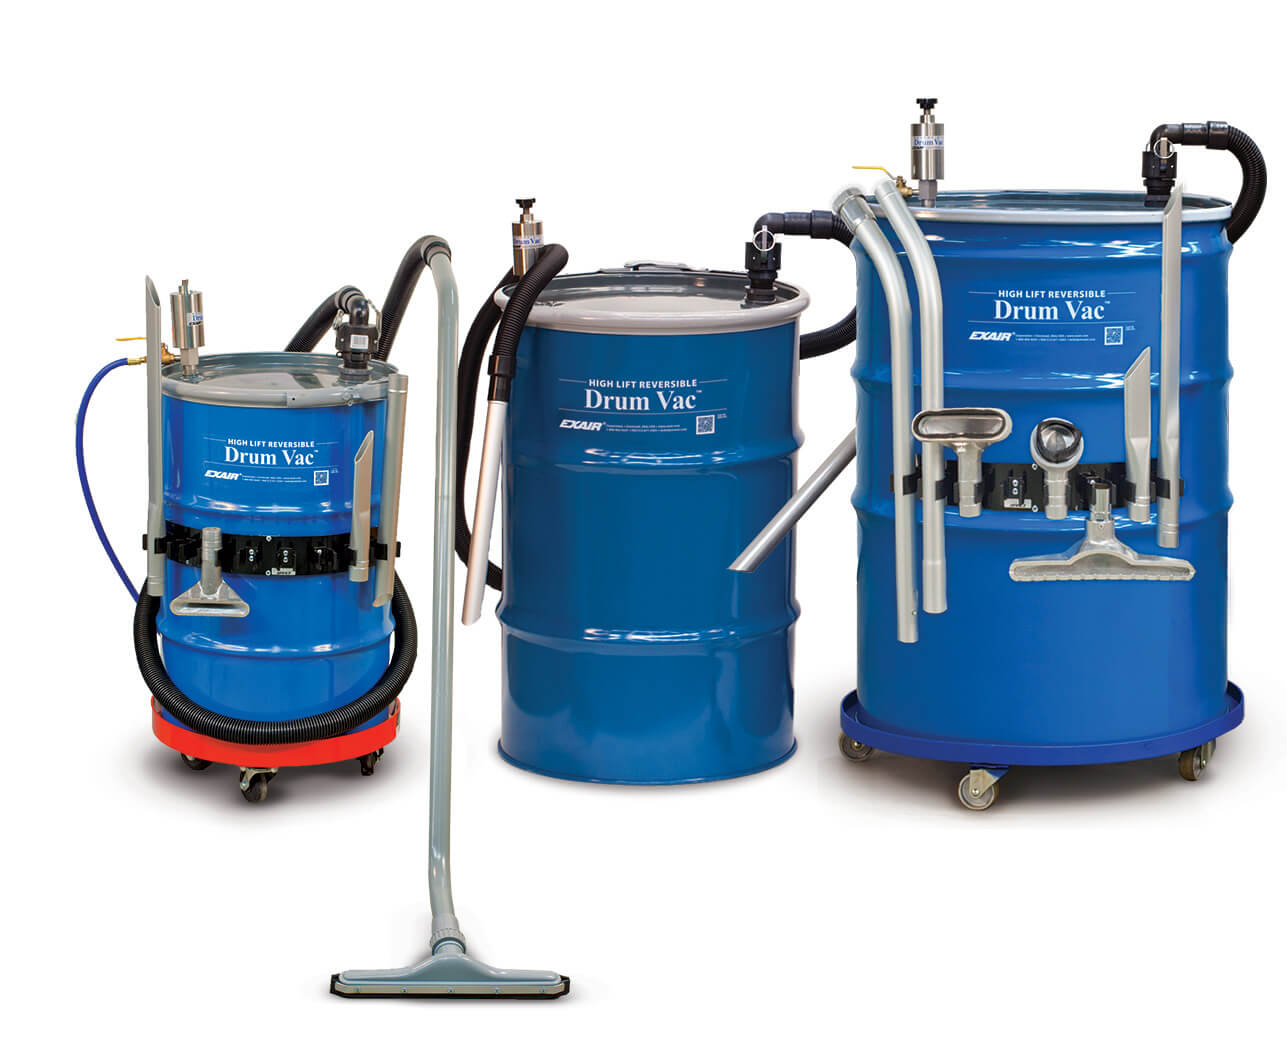 Aspiradora neumática de líquidos – Drum Vac Reversible Exair, Airtec  Servicios